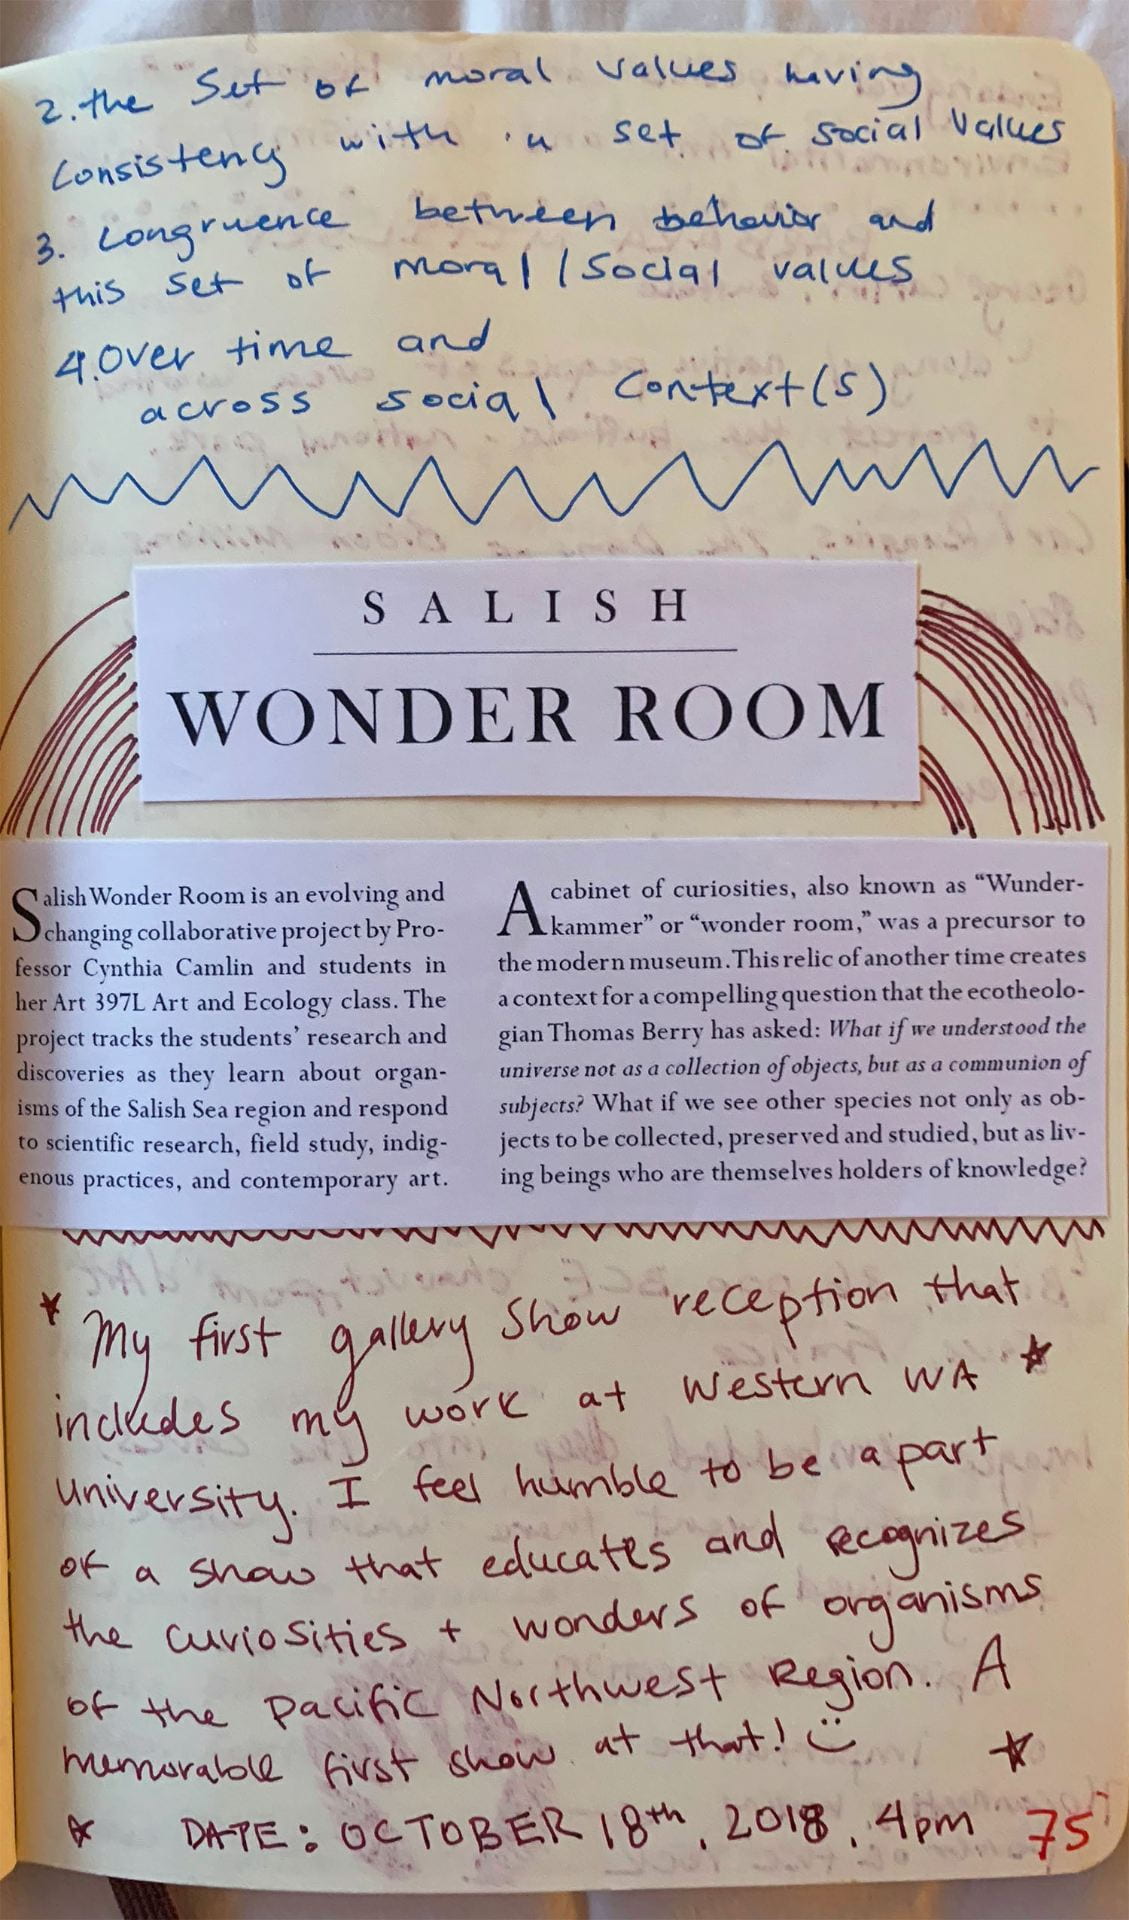 a journal entry describing the Salish Wonder Room exhibition